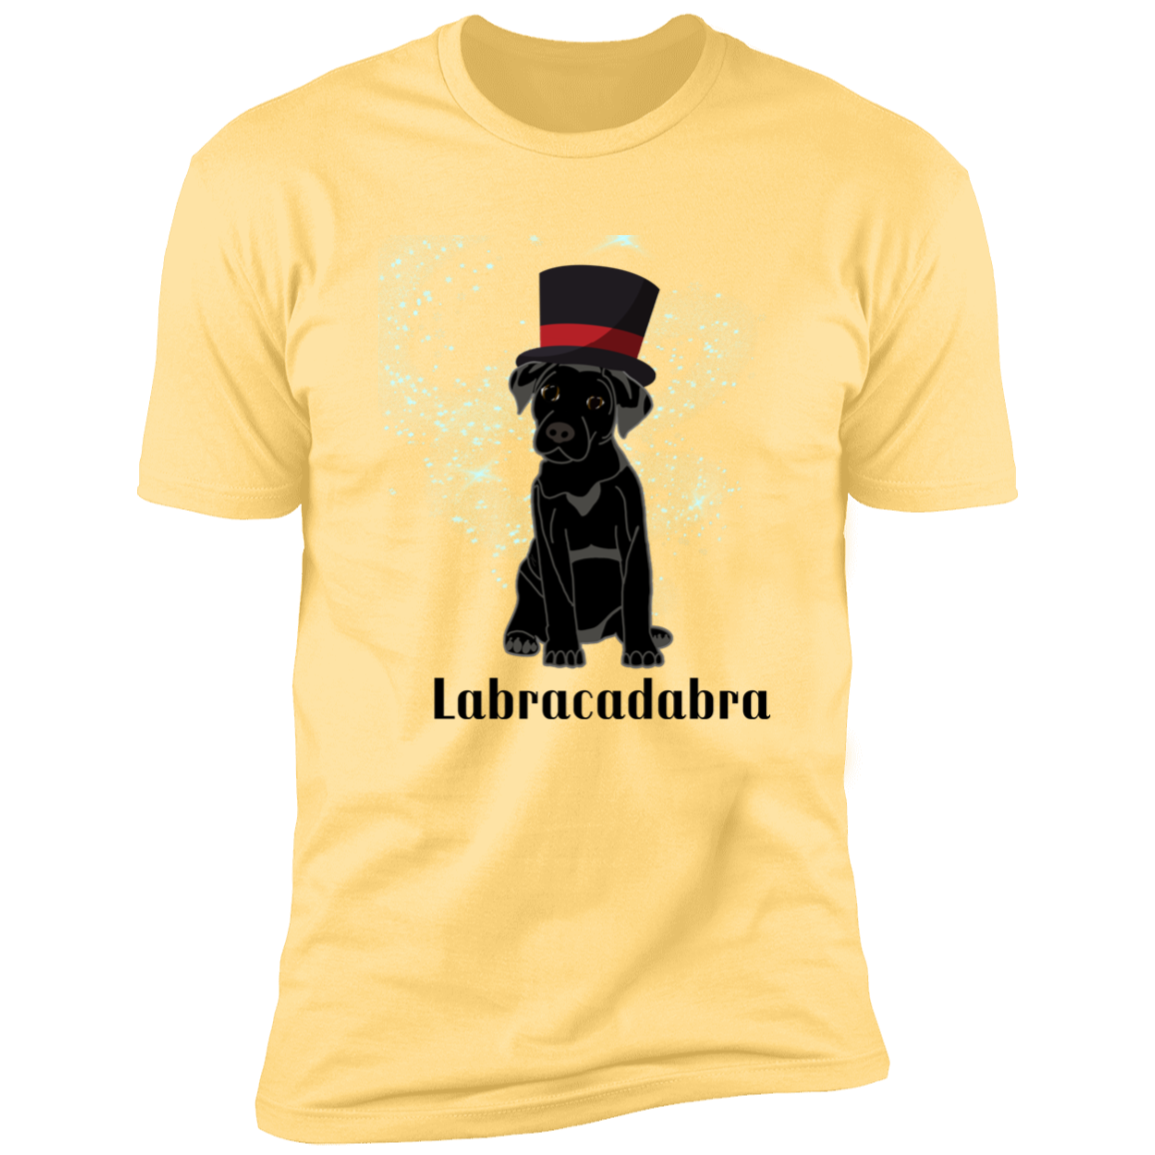 Labracadabra funny dog shirt, funny dog shirt for humans, funny labrador shirt. in banana cream